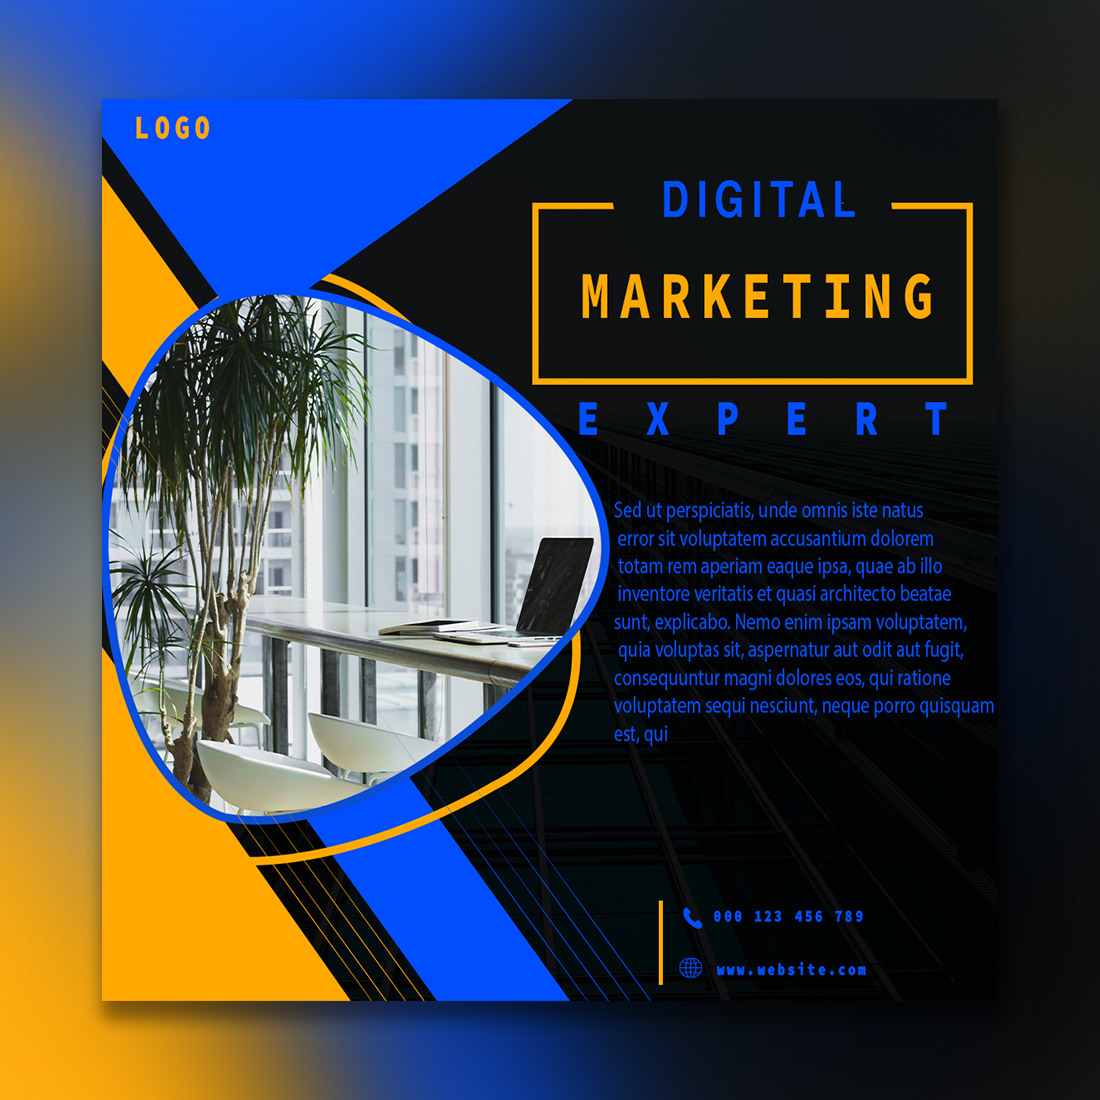 Digital marketing and real estate corporate creative social media post template design cover image.